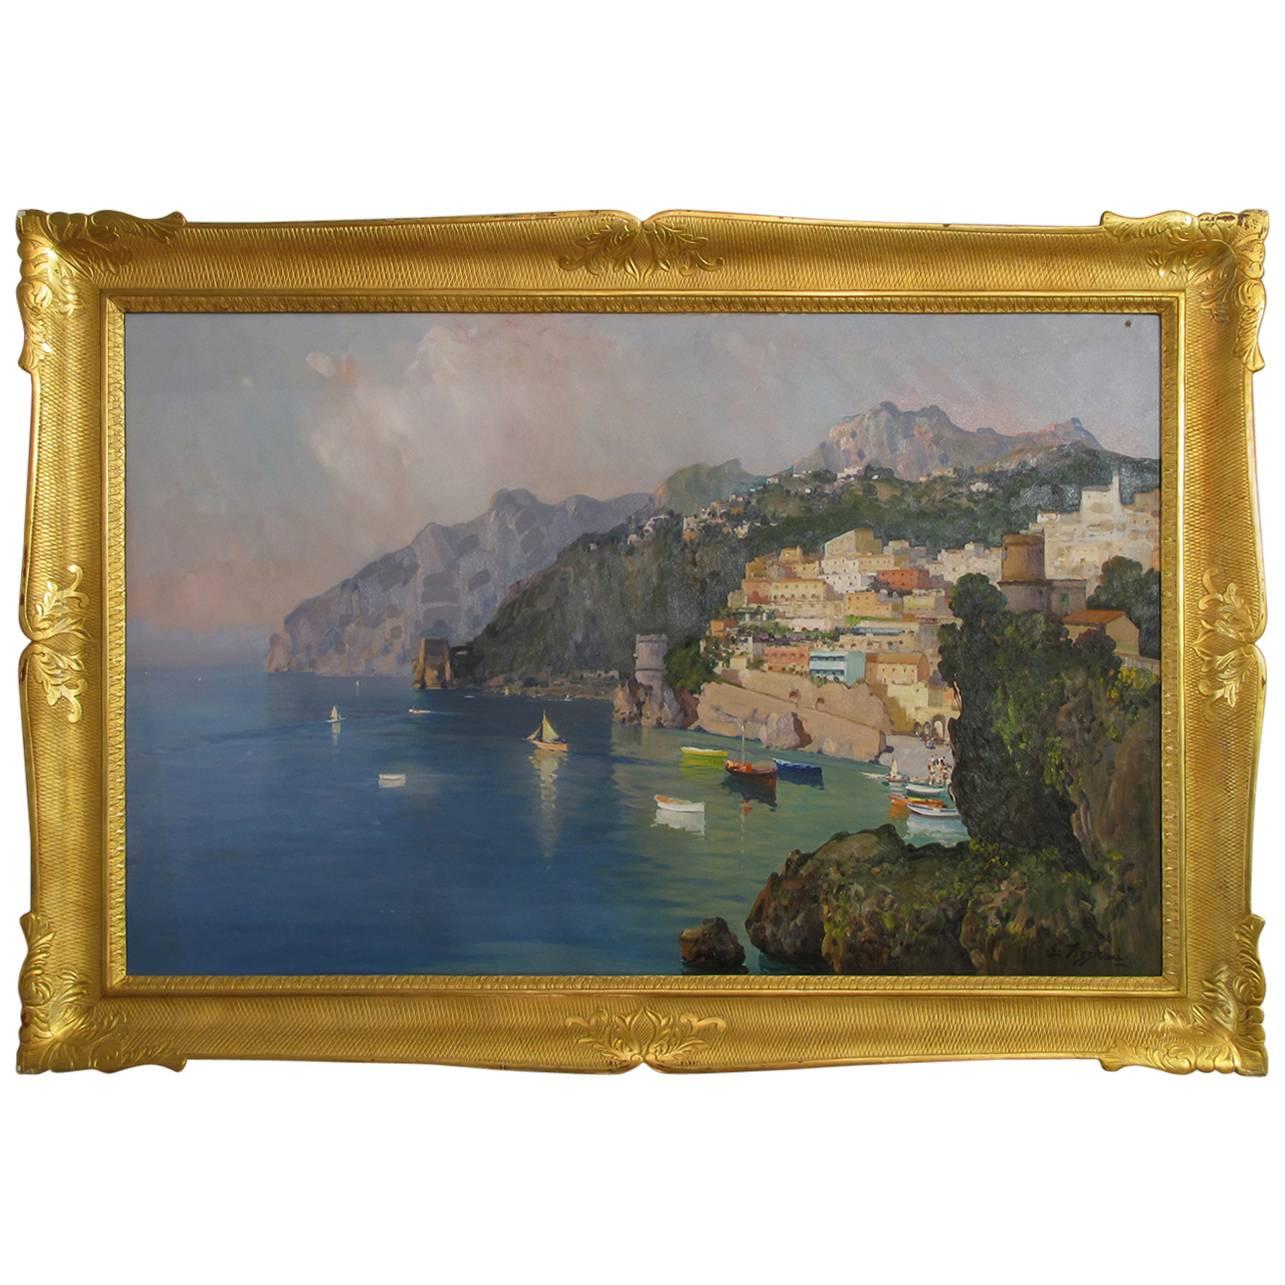 20th Century Italian Painting Depicting the Amalfi Coast by Guglielmo Pizzirani